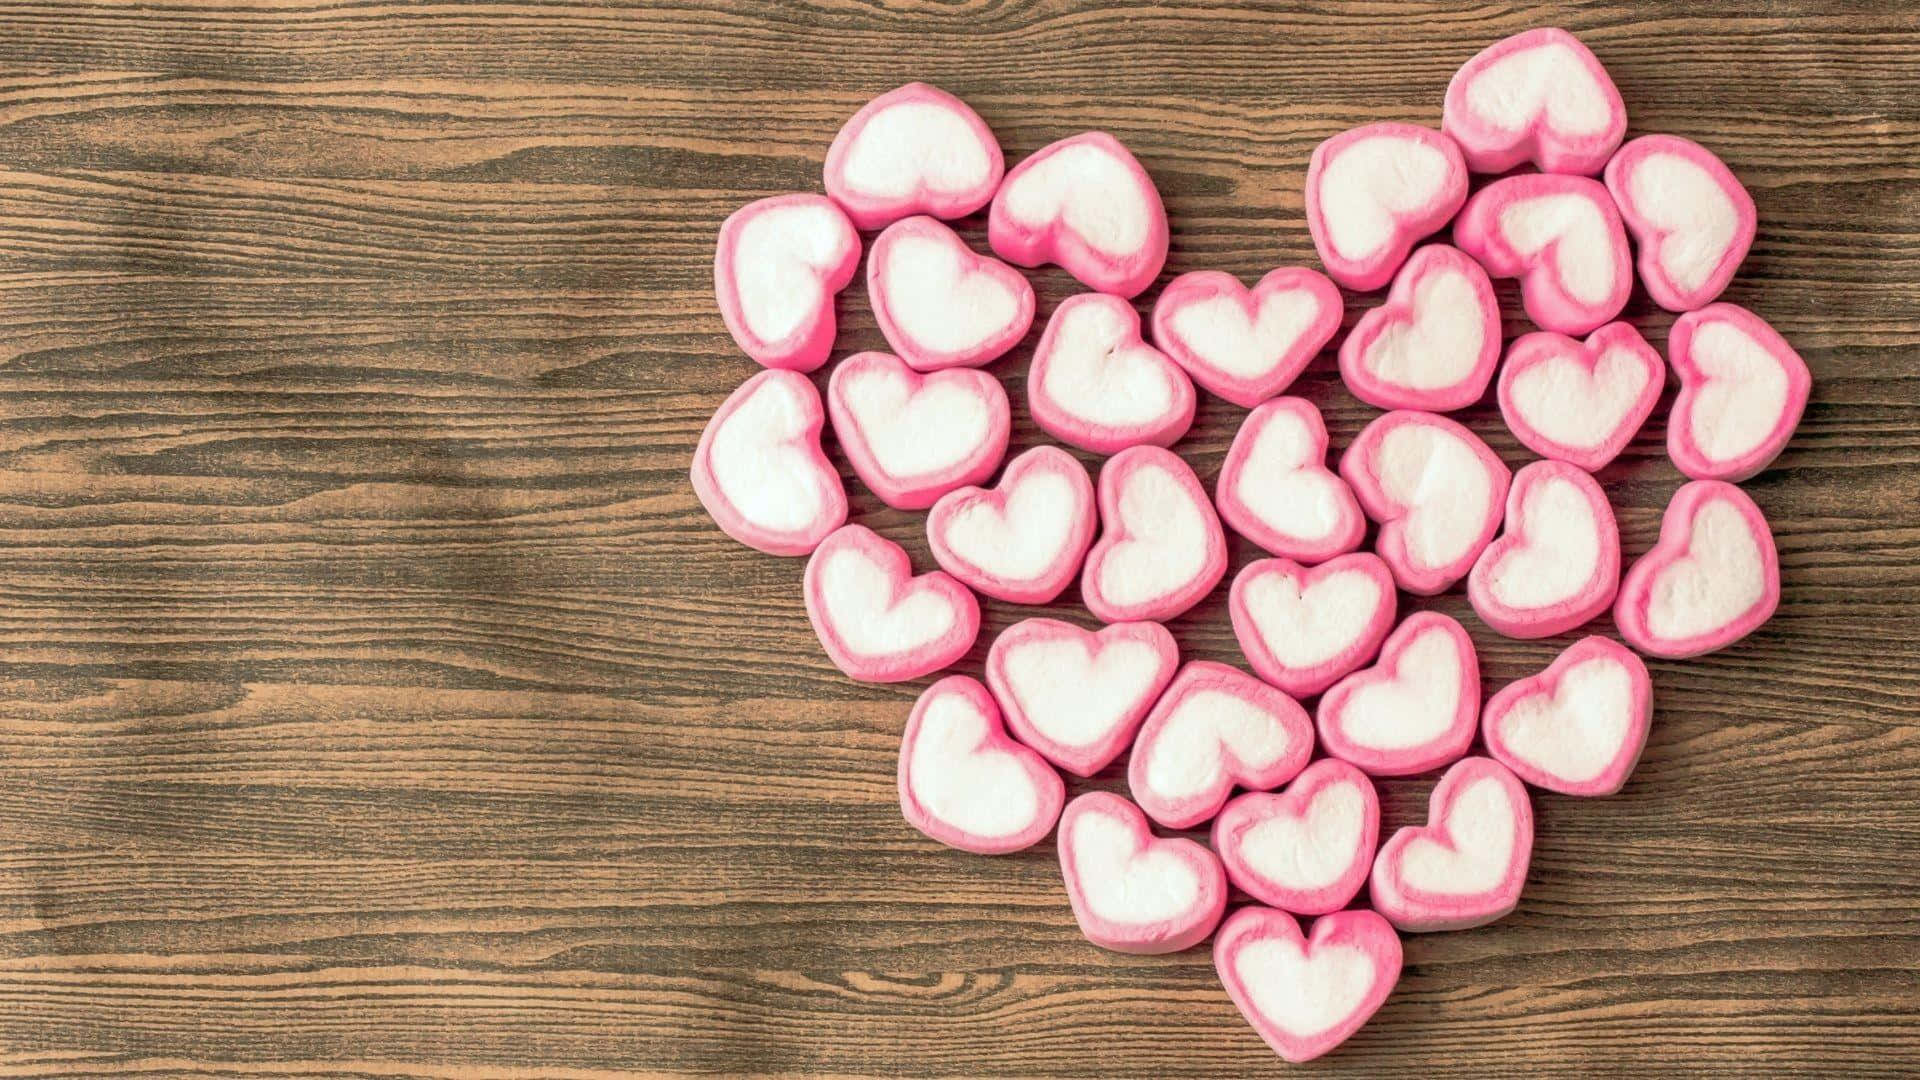 Pink Heart Candies Wooden Background.jpg Wallpaper